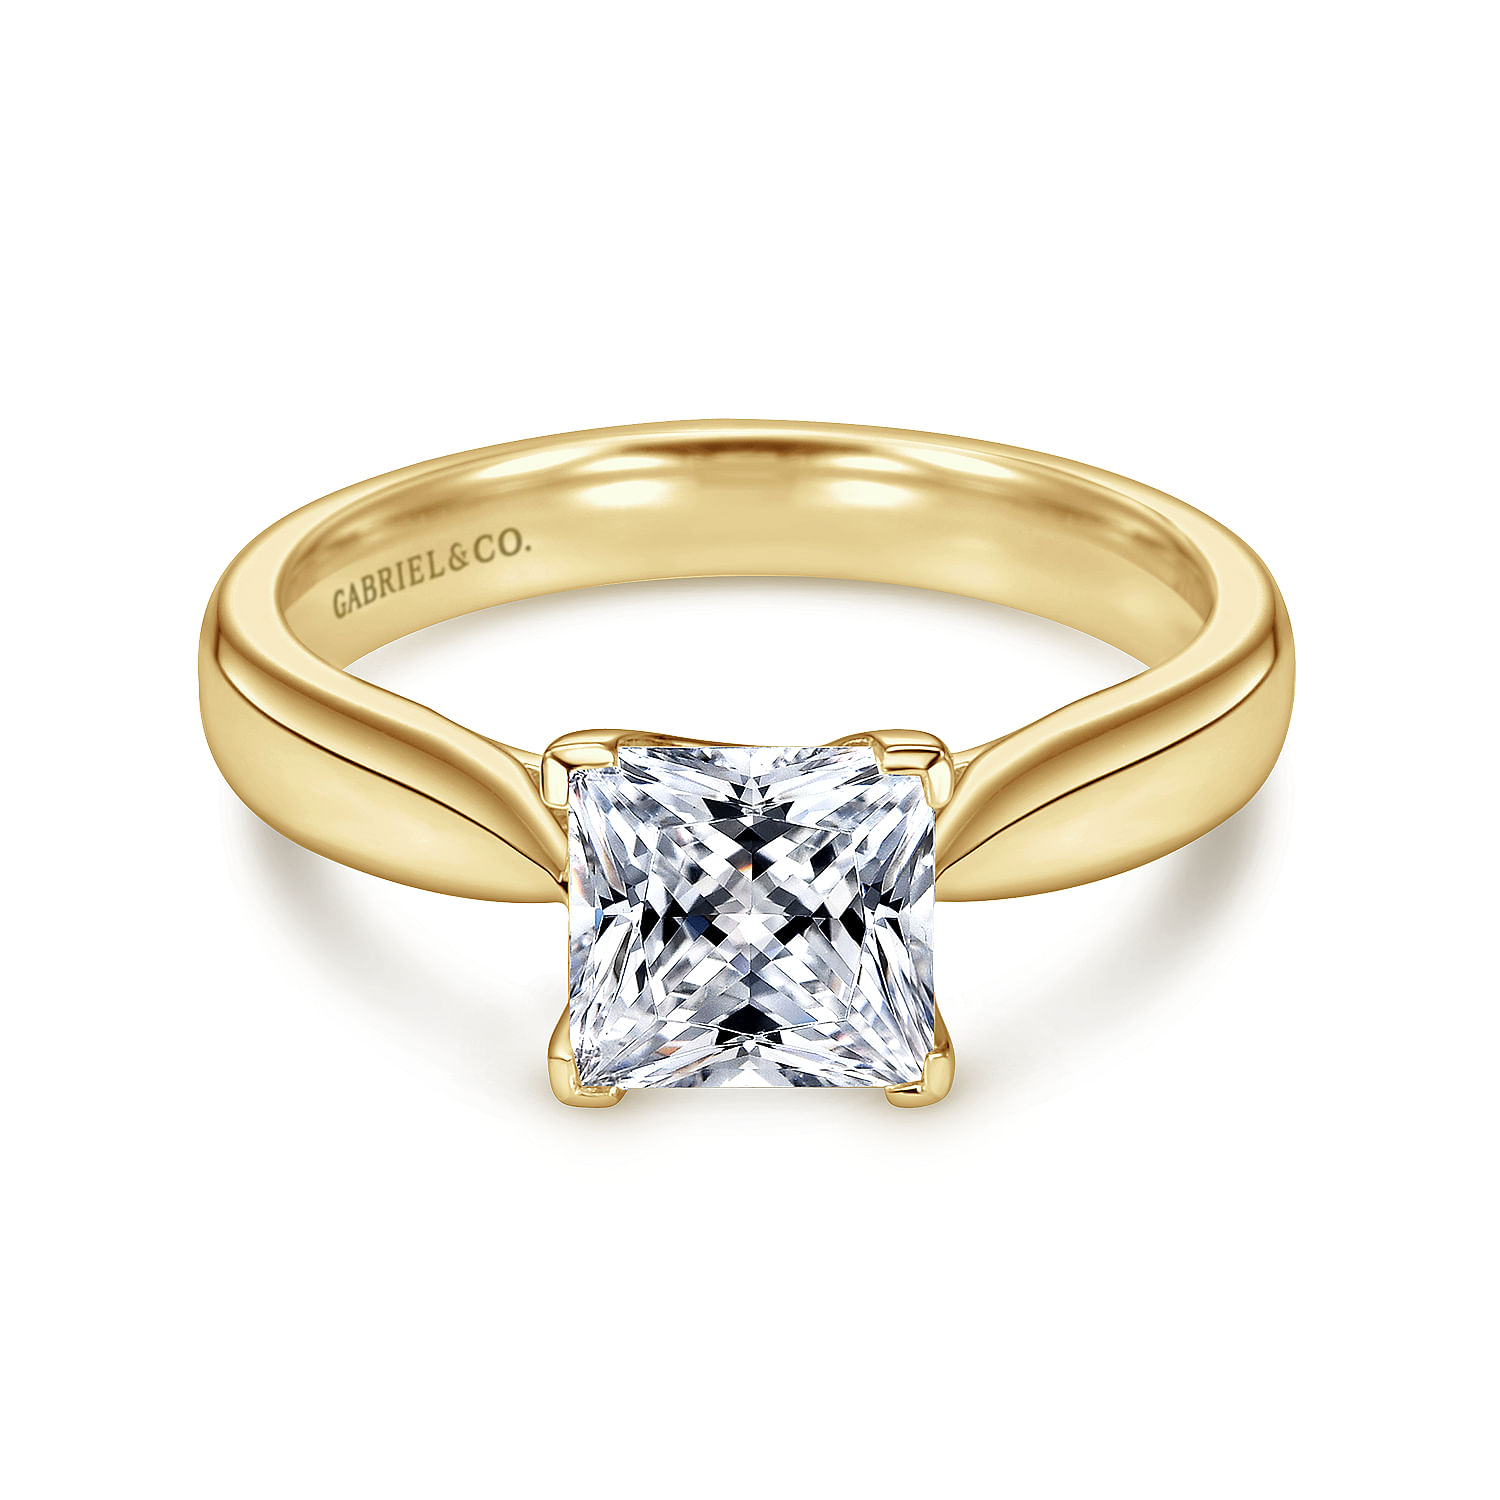 Jamie - 14K Yellow Gold Princess Cut Diamond Engagement Ring